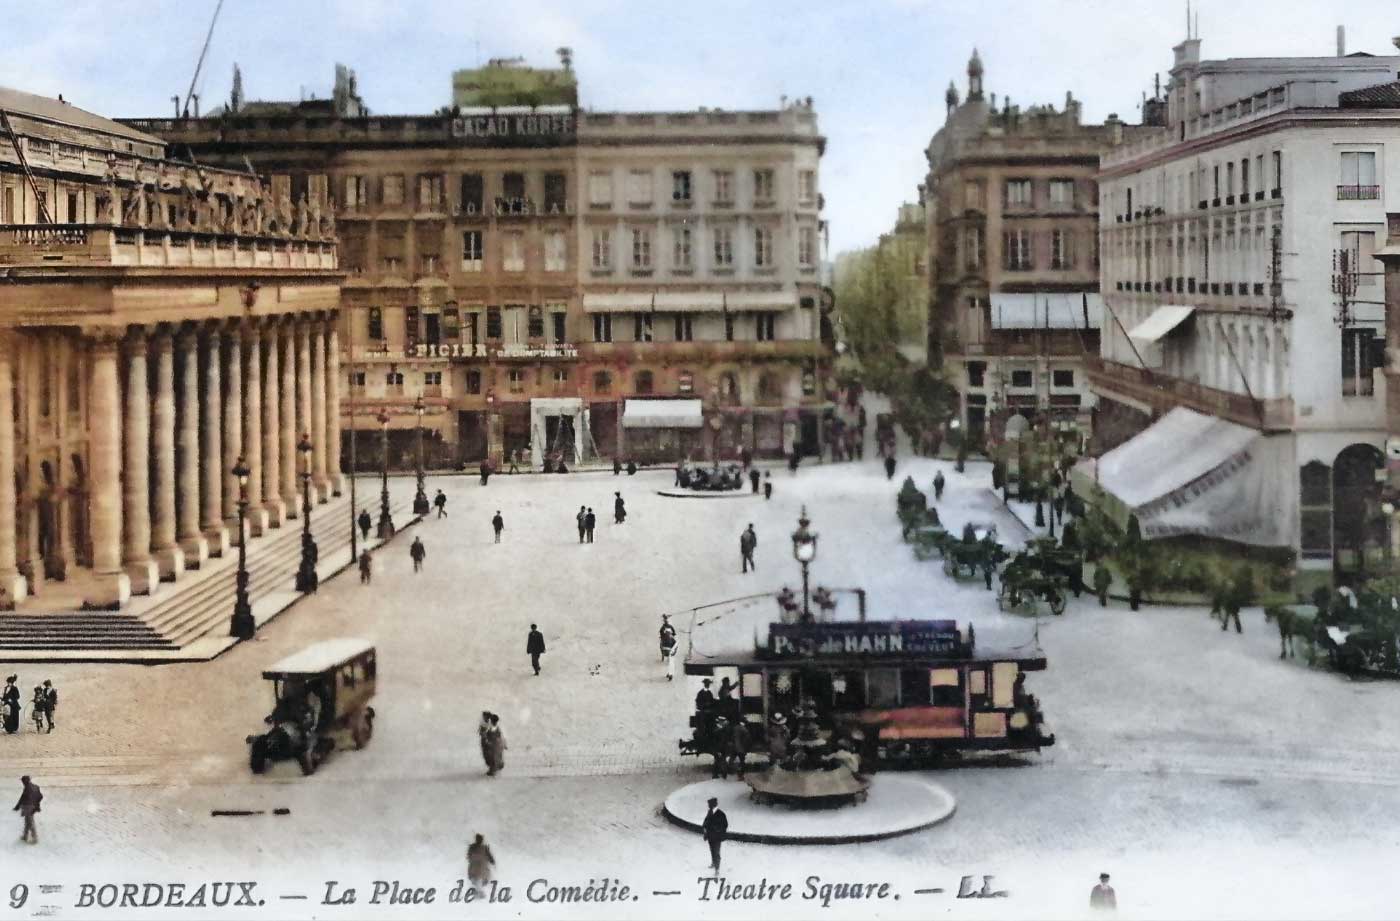 Bordeux City Old Photo (1900s)